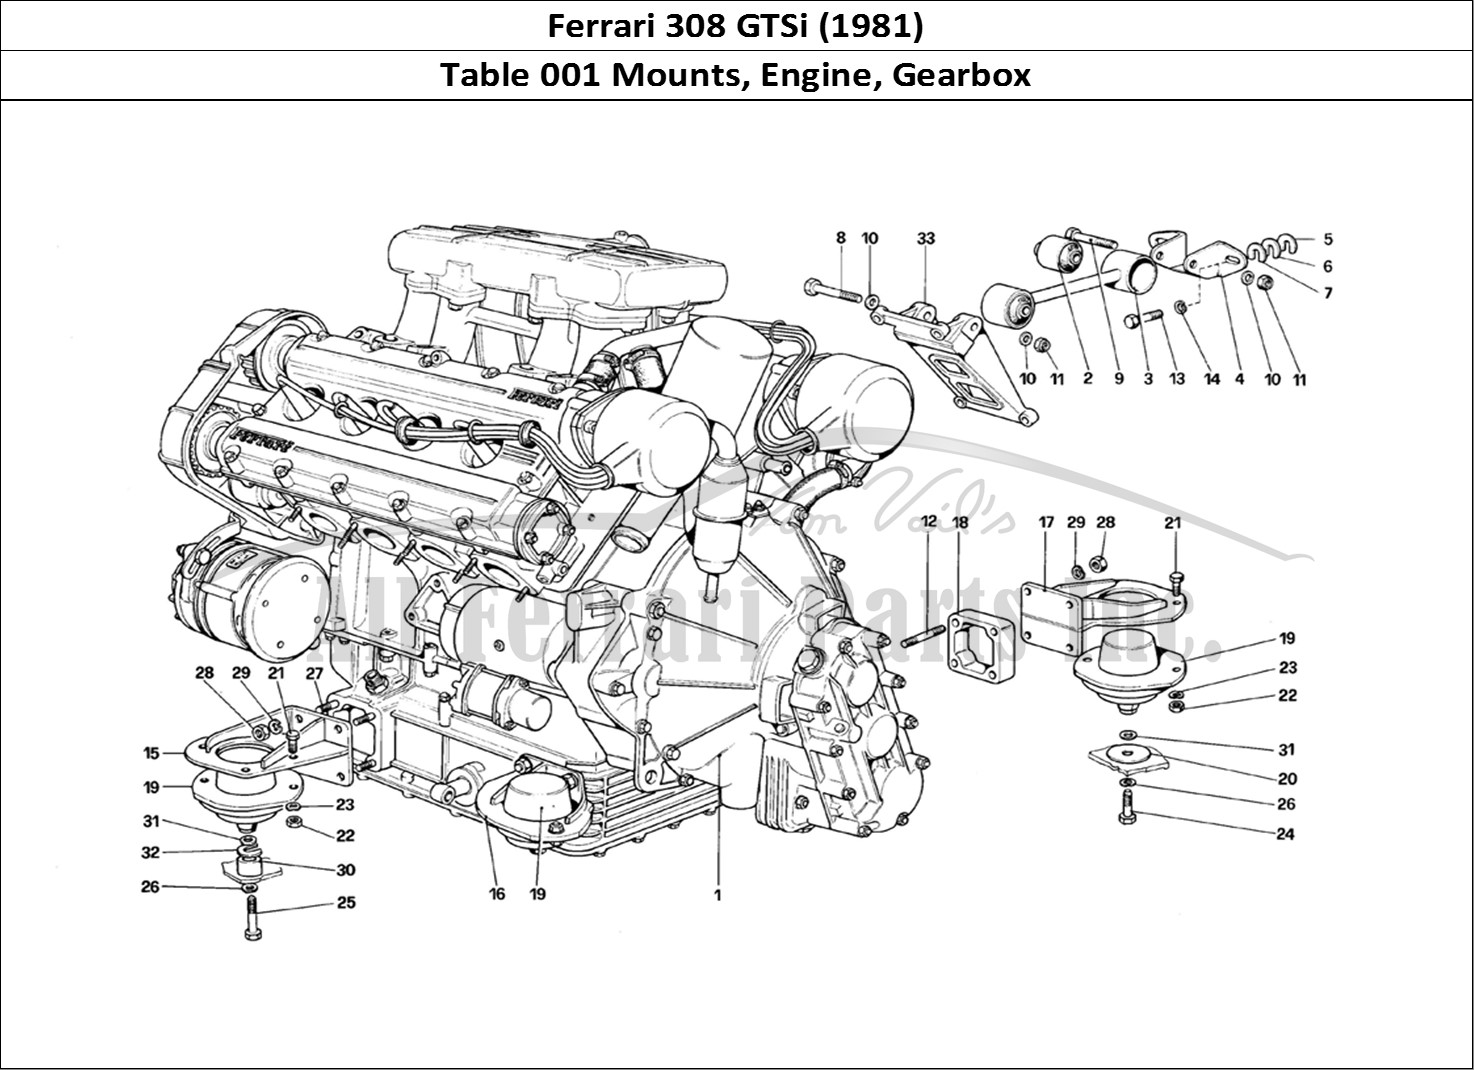 Ferrari Parts Ferrari 308 GTBi (1981) Page 001 Engine - Gearbox and Supp